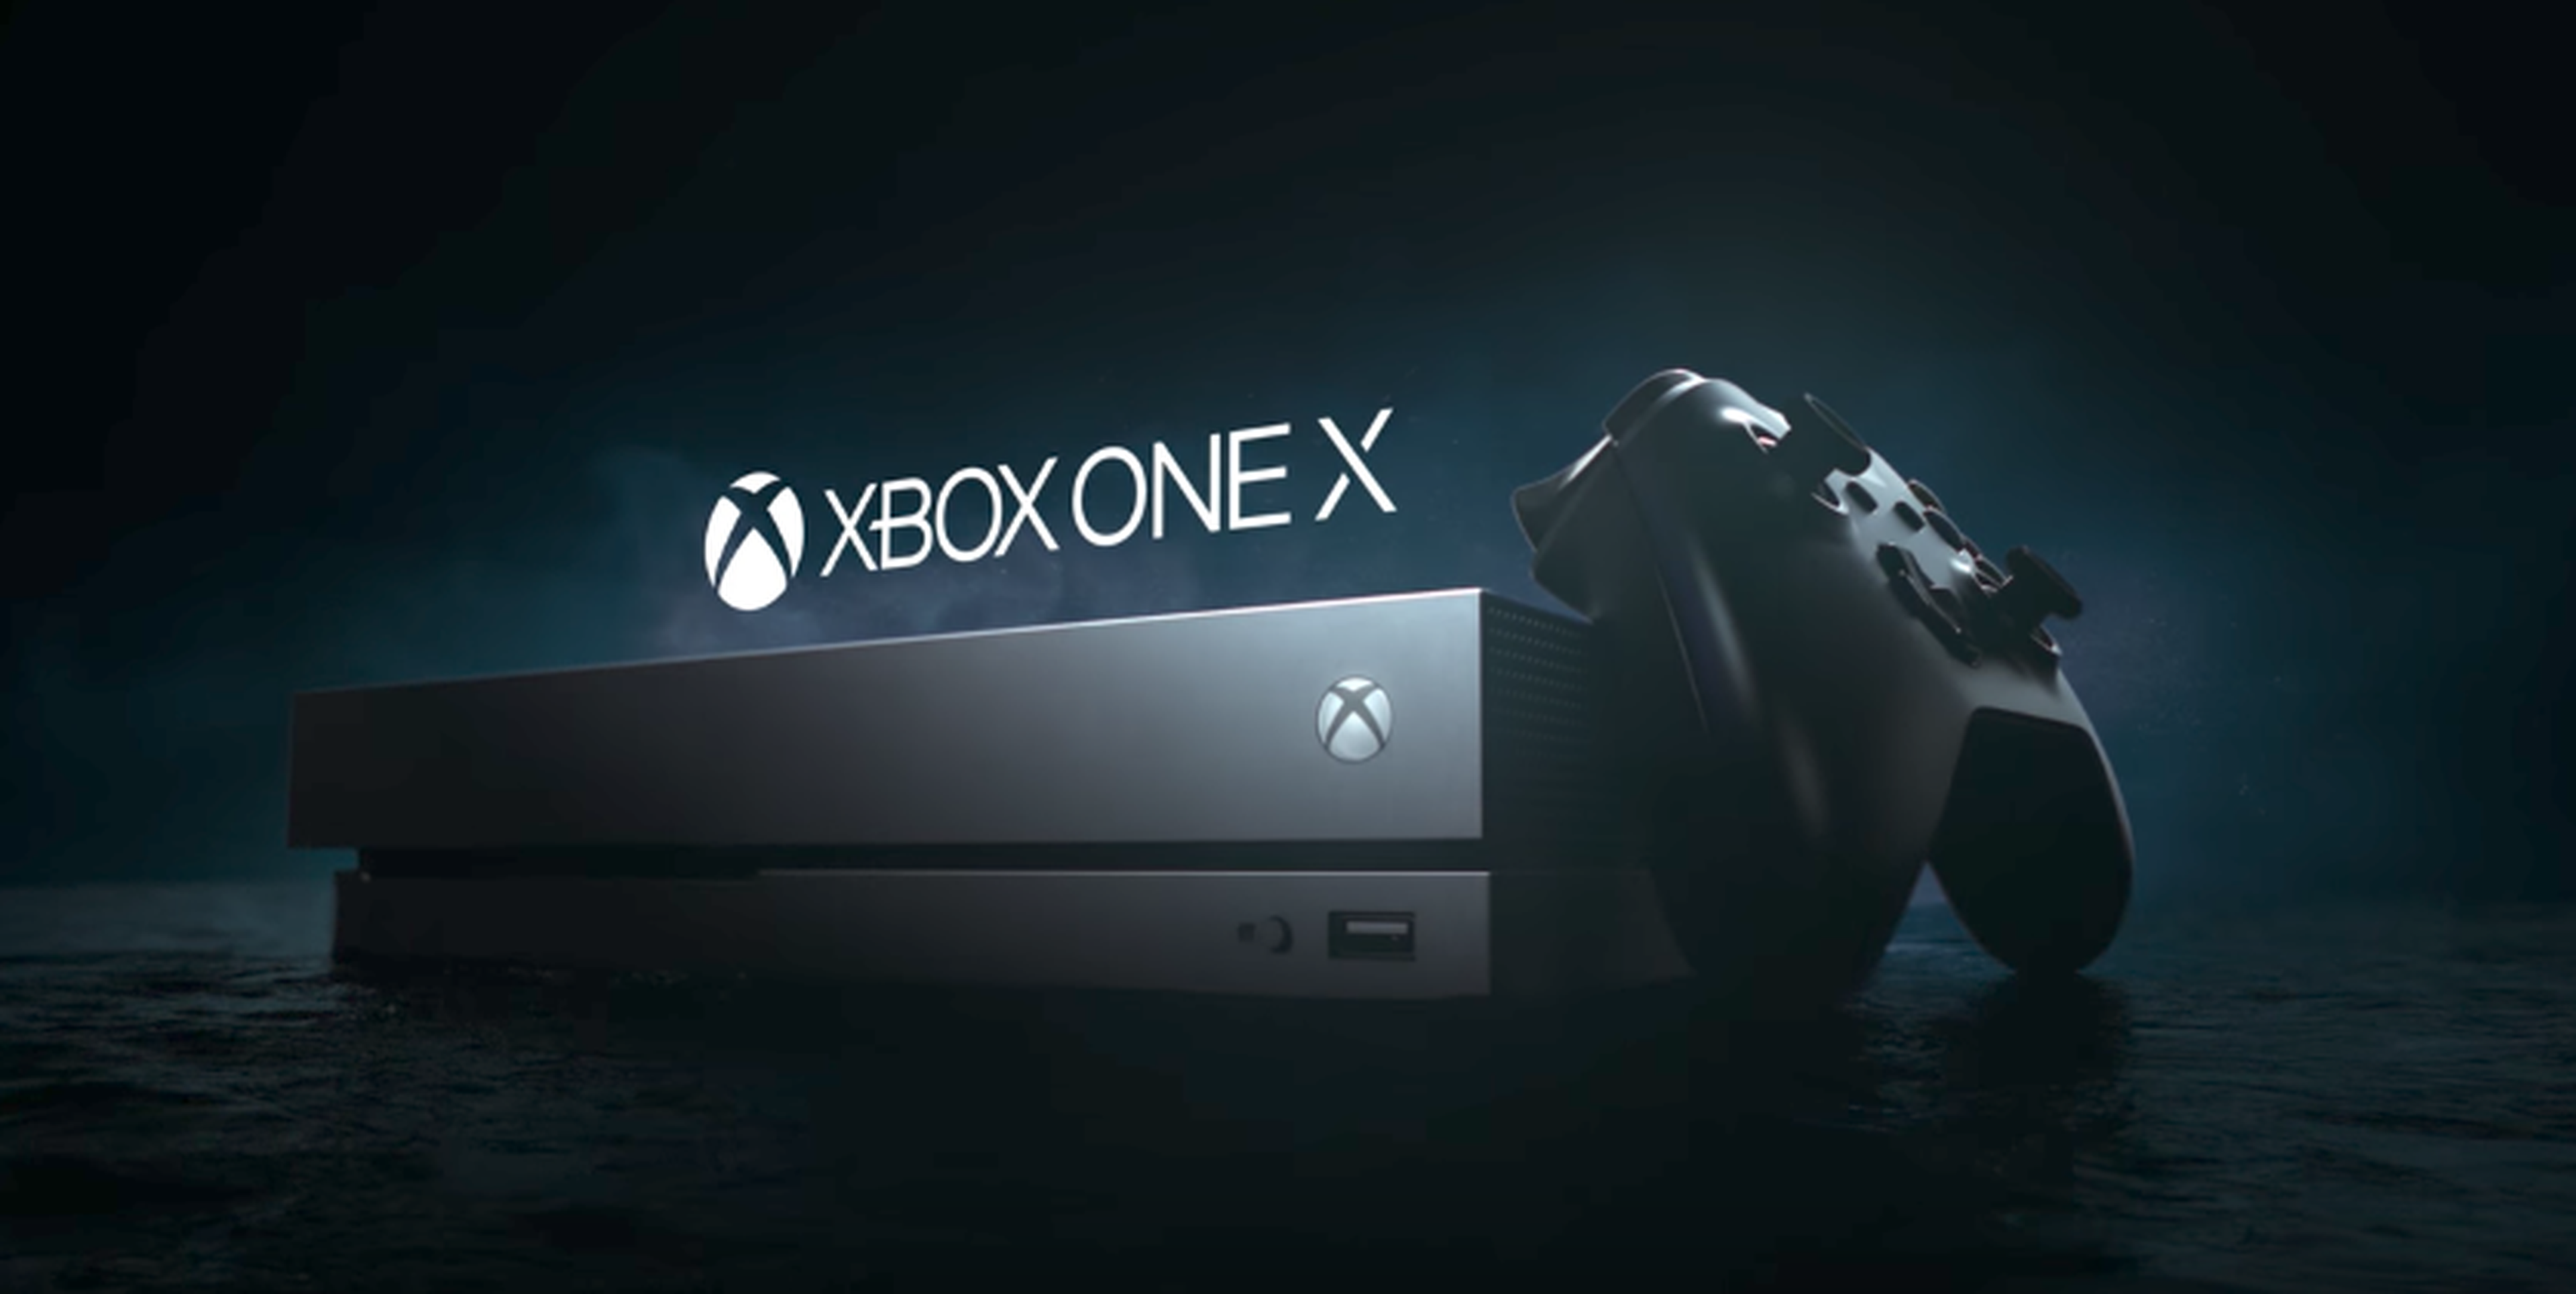 Xbox One X: Feel True Power - Spot publicitario